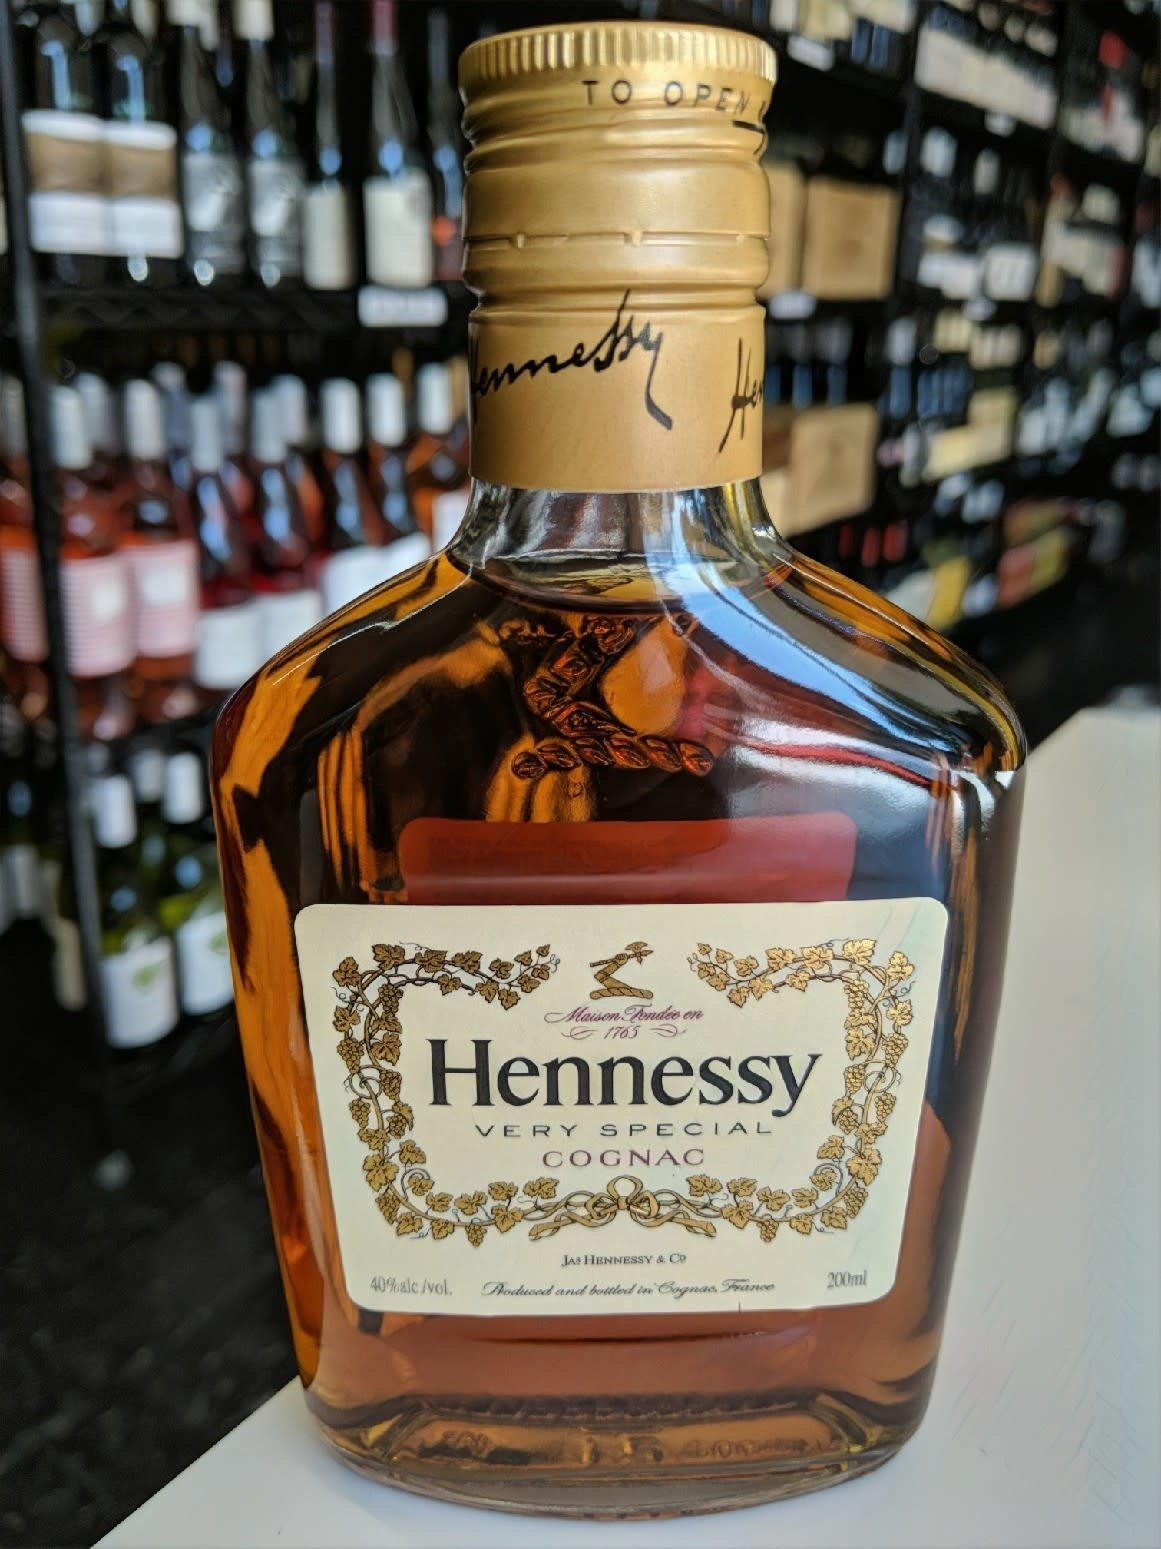 Hennessy Vs Cognac 200ML